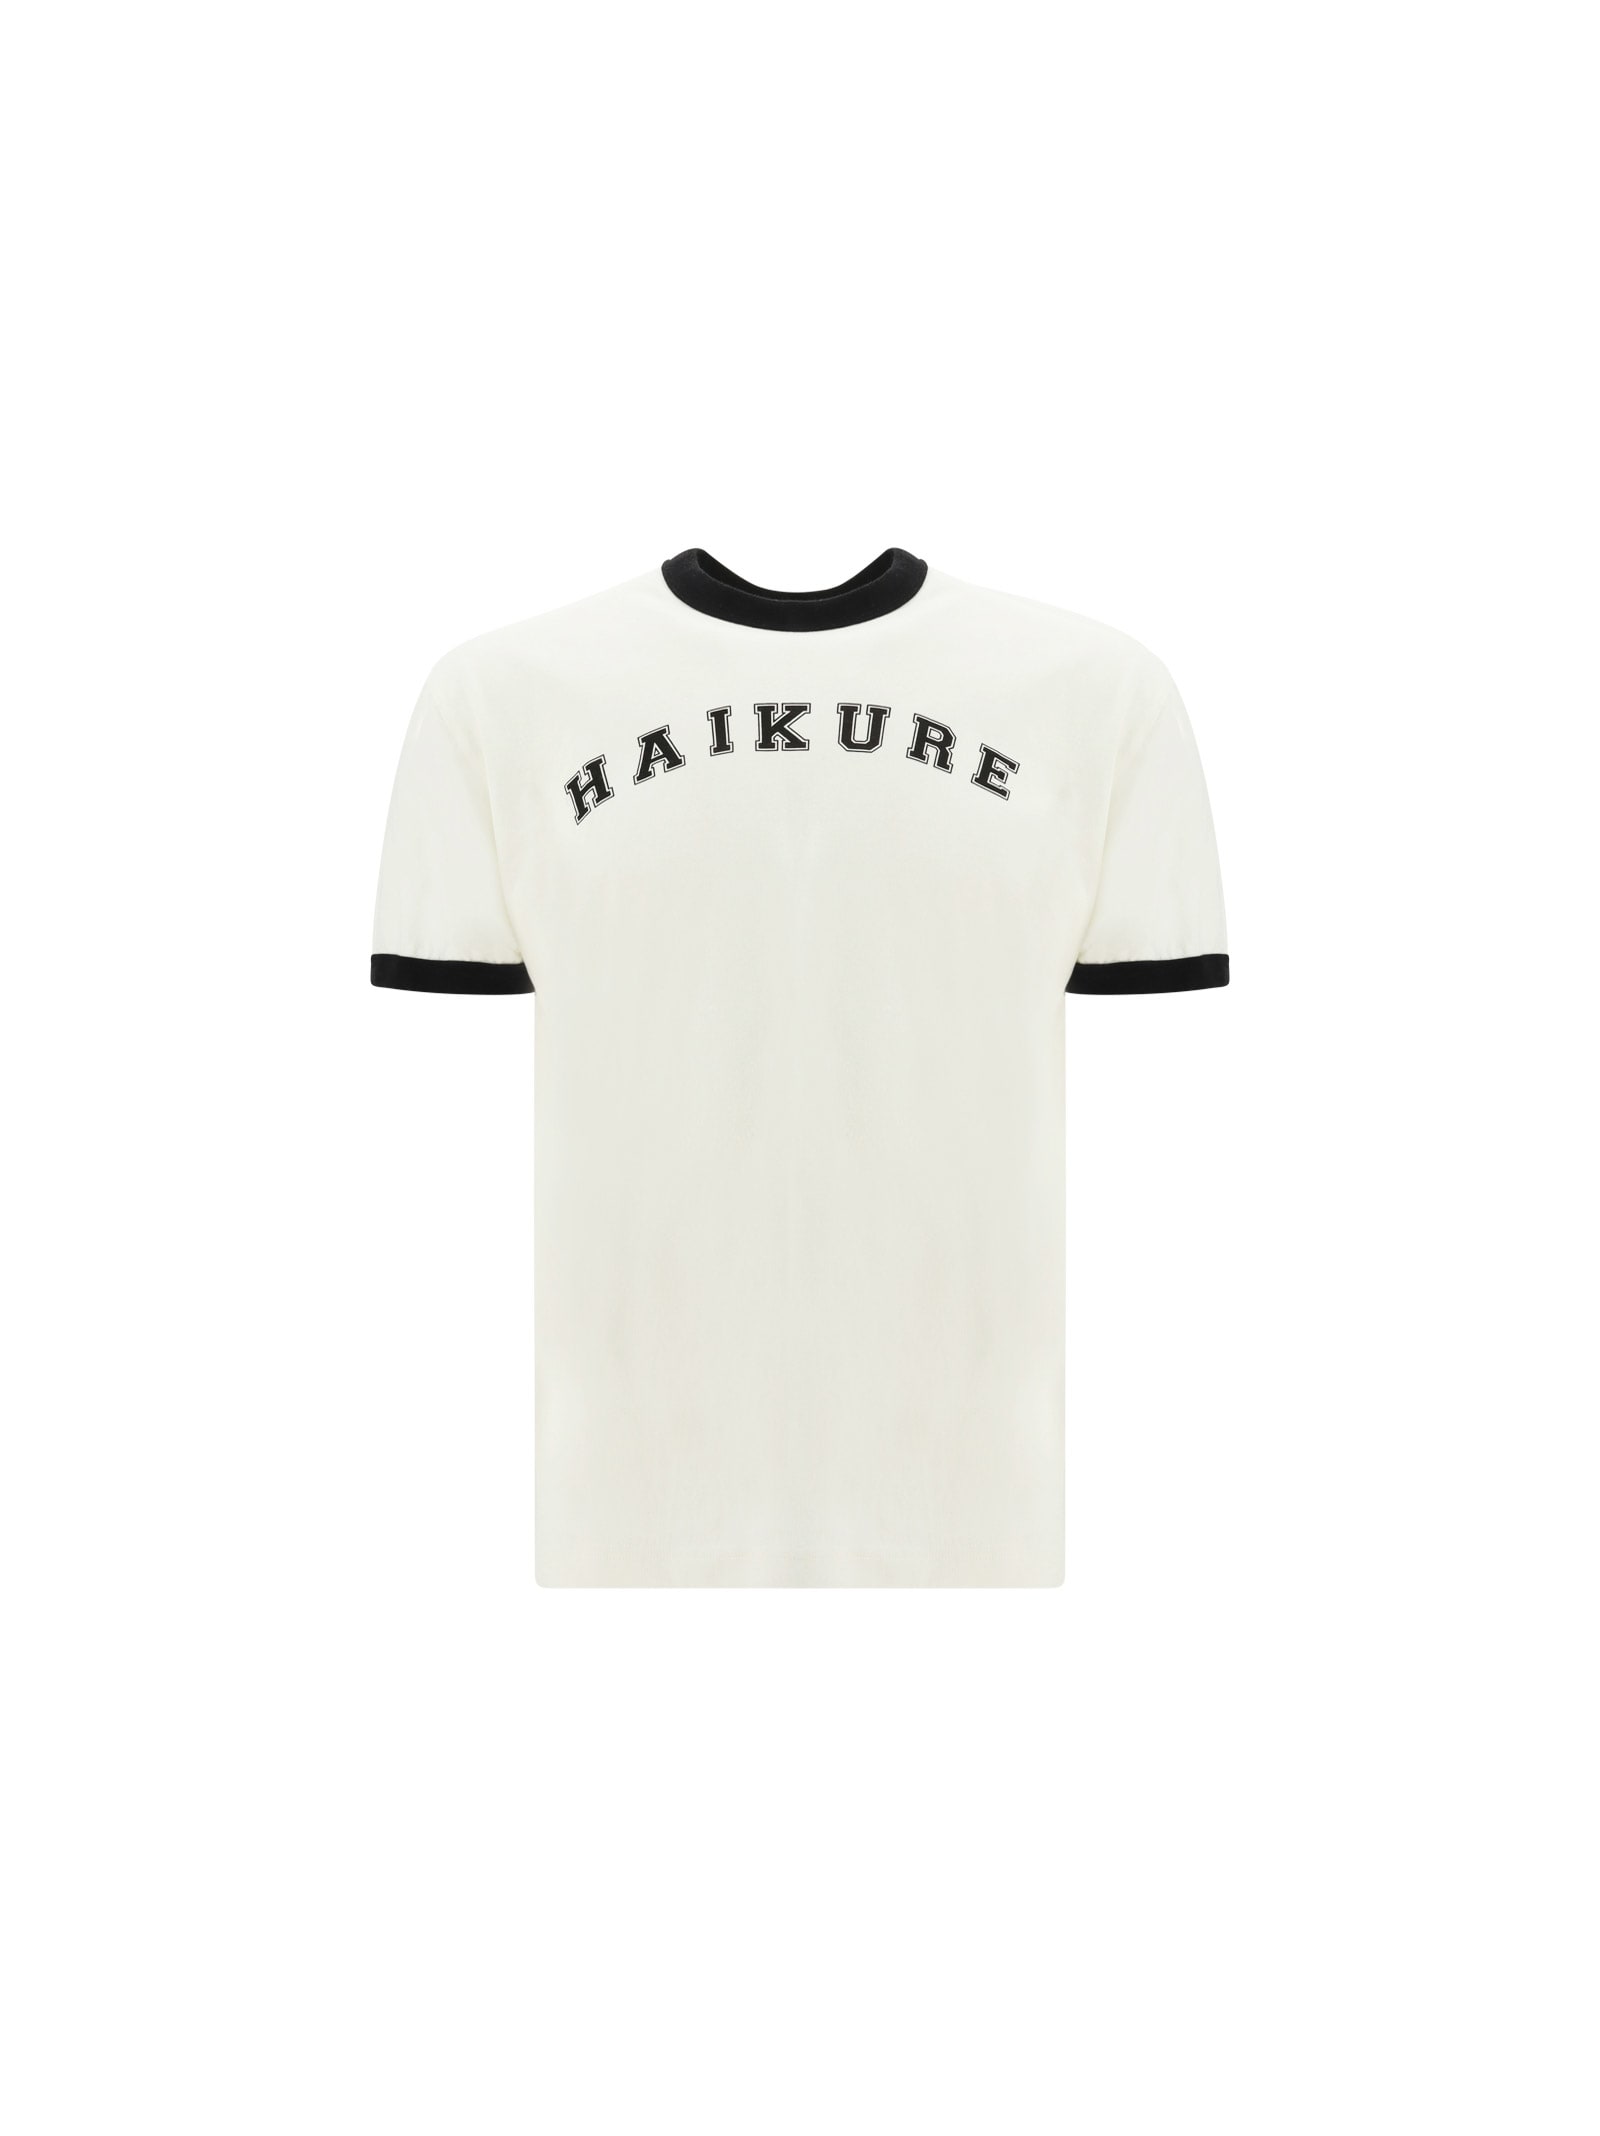 Shop Haikure Owen T-shirt